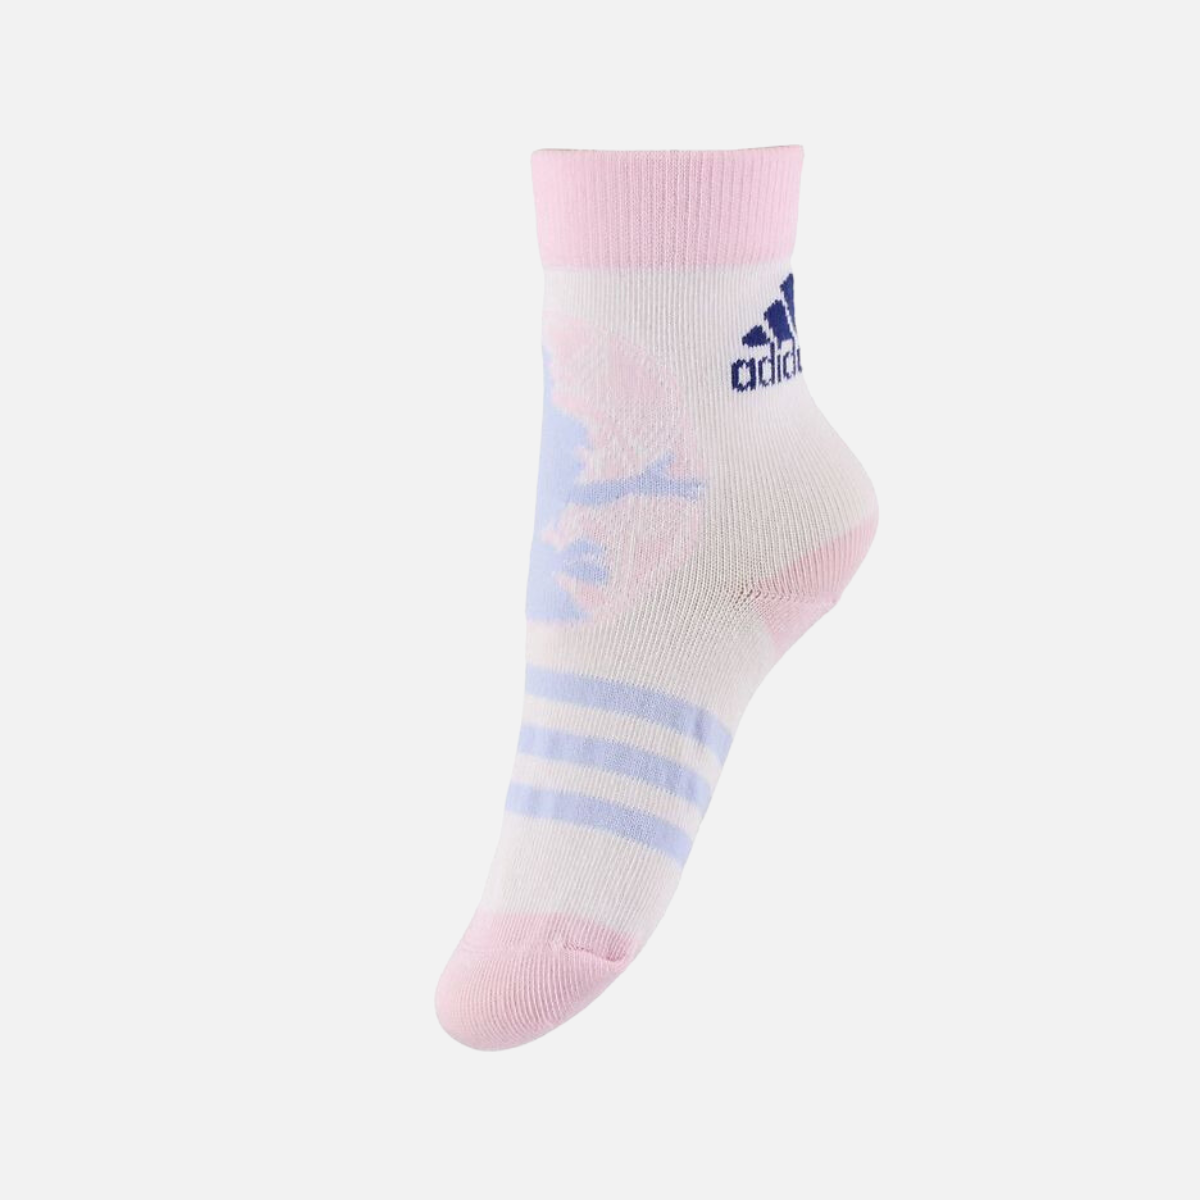 Adidas Disney Moana Kids Girl Socks 3 Pairs -White/Blue Dawn/Clear Pink